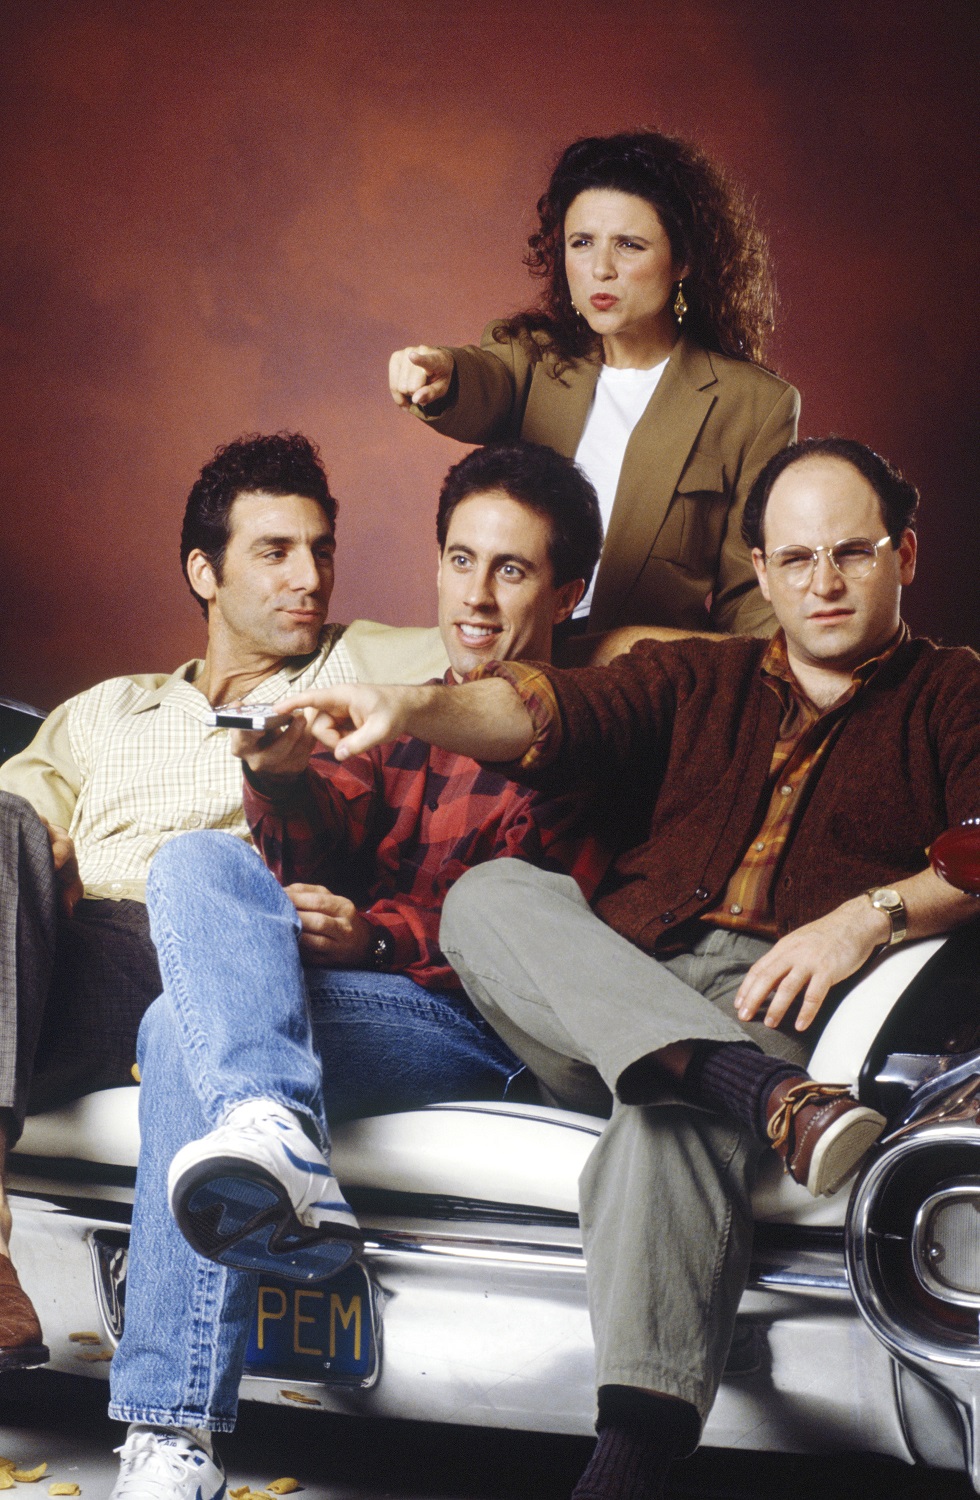 Michael Richards as Cosmo Kramer, Jerry Seinfeld as Jerry Seinfeld, Julia Louis-Dreyfus as Elaine Benes and Jason Alexander as George Costanza